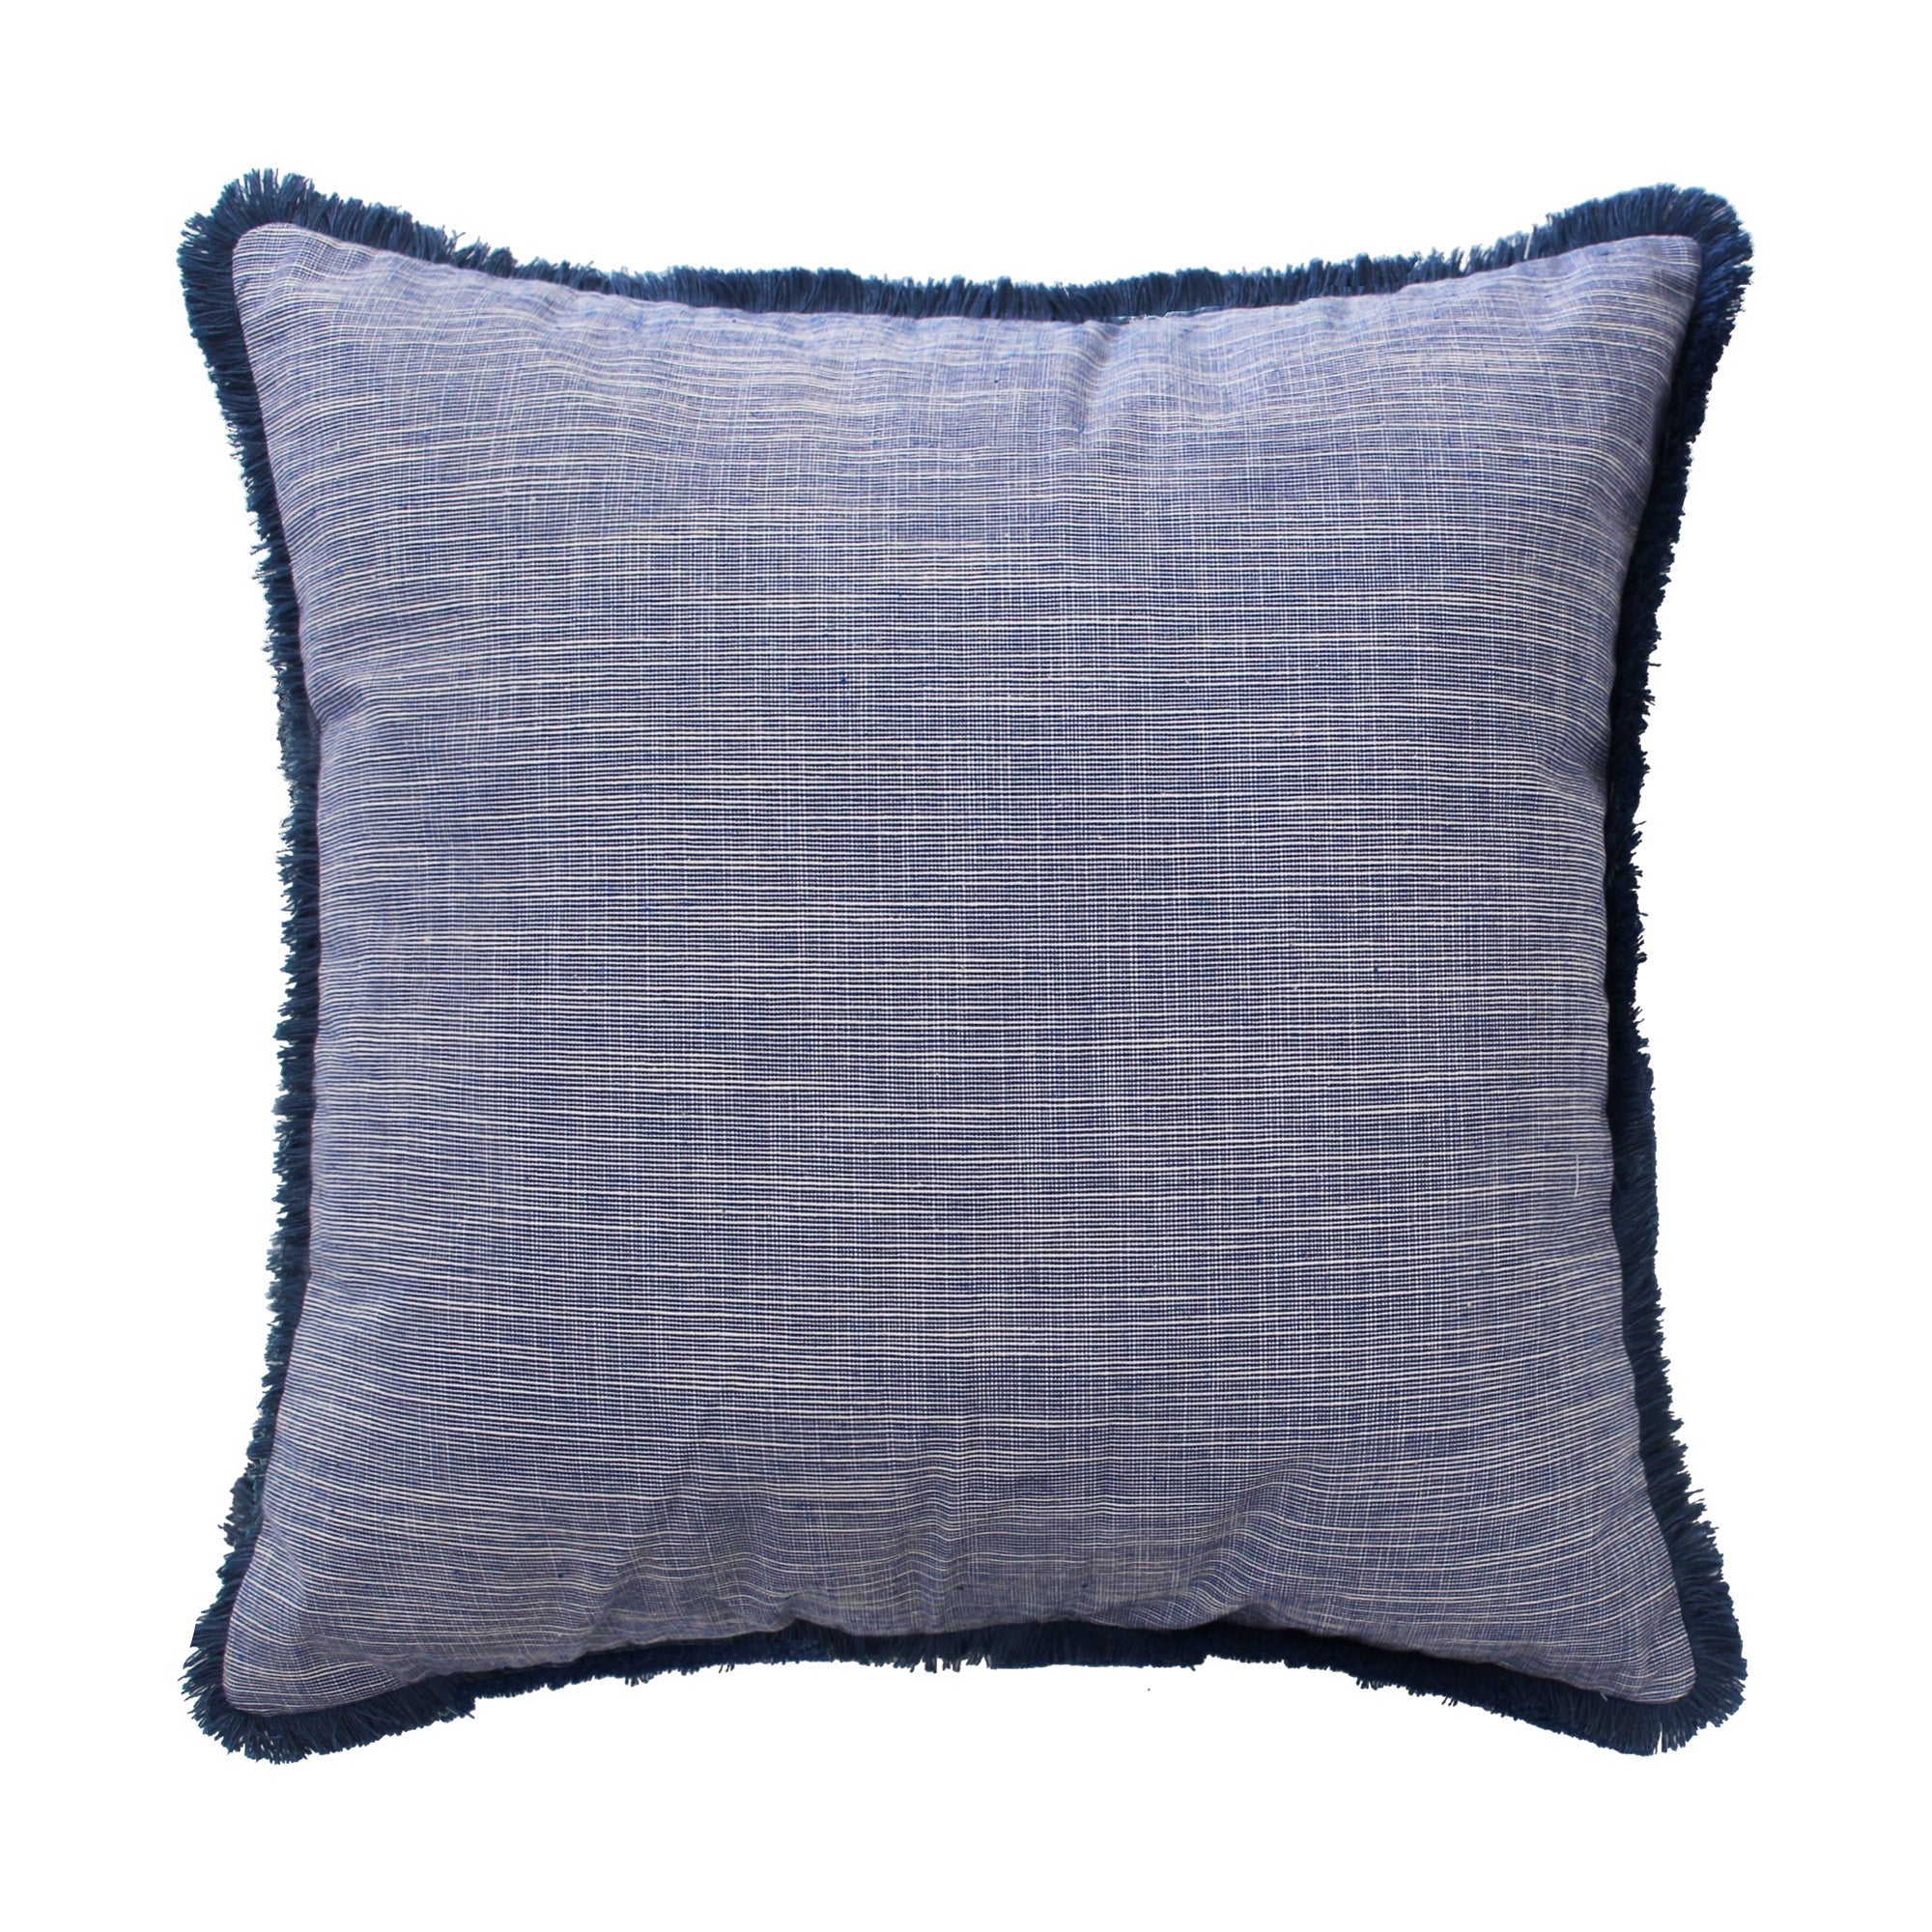 Levtex Home Pickford Comforter Set - Cotton